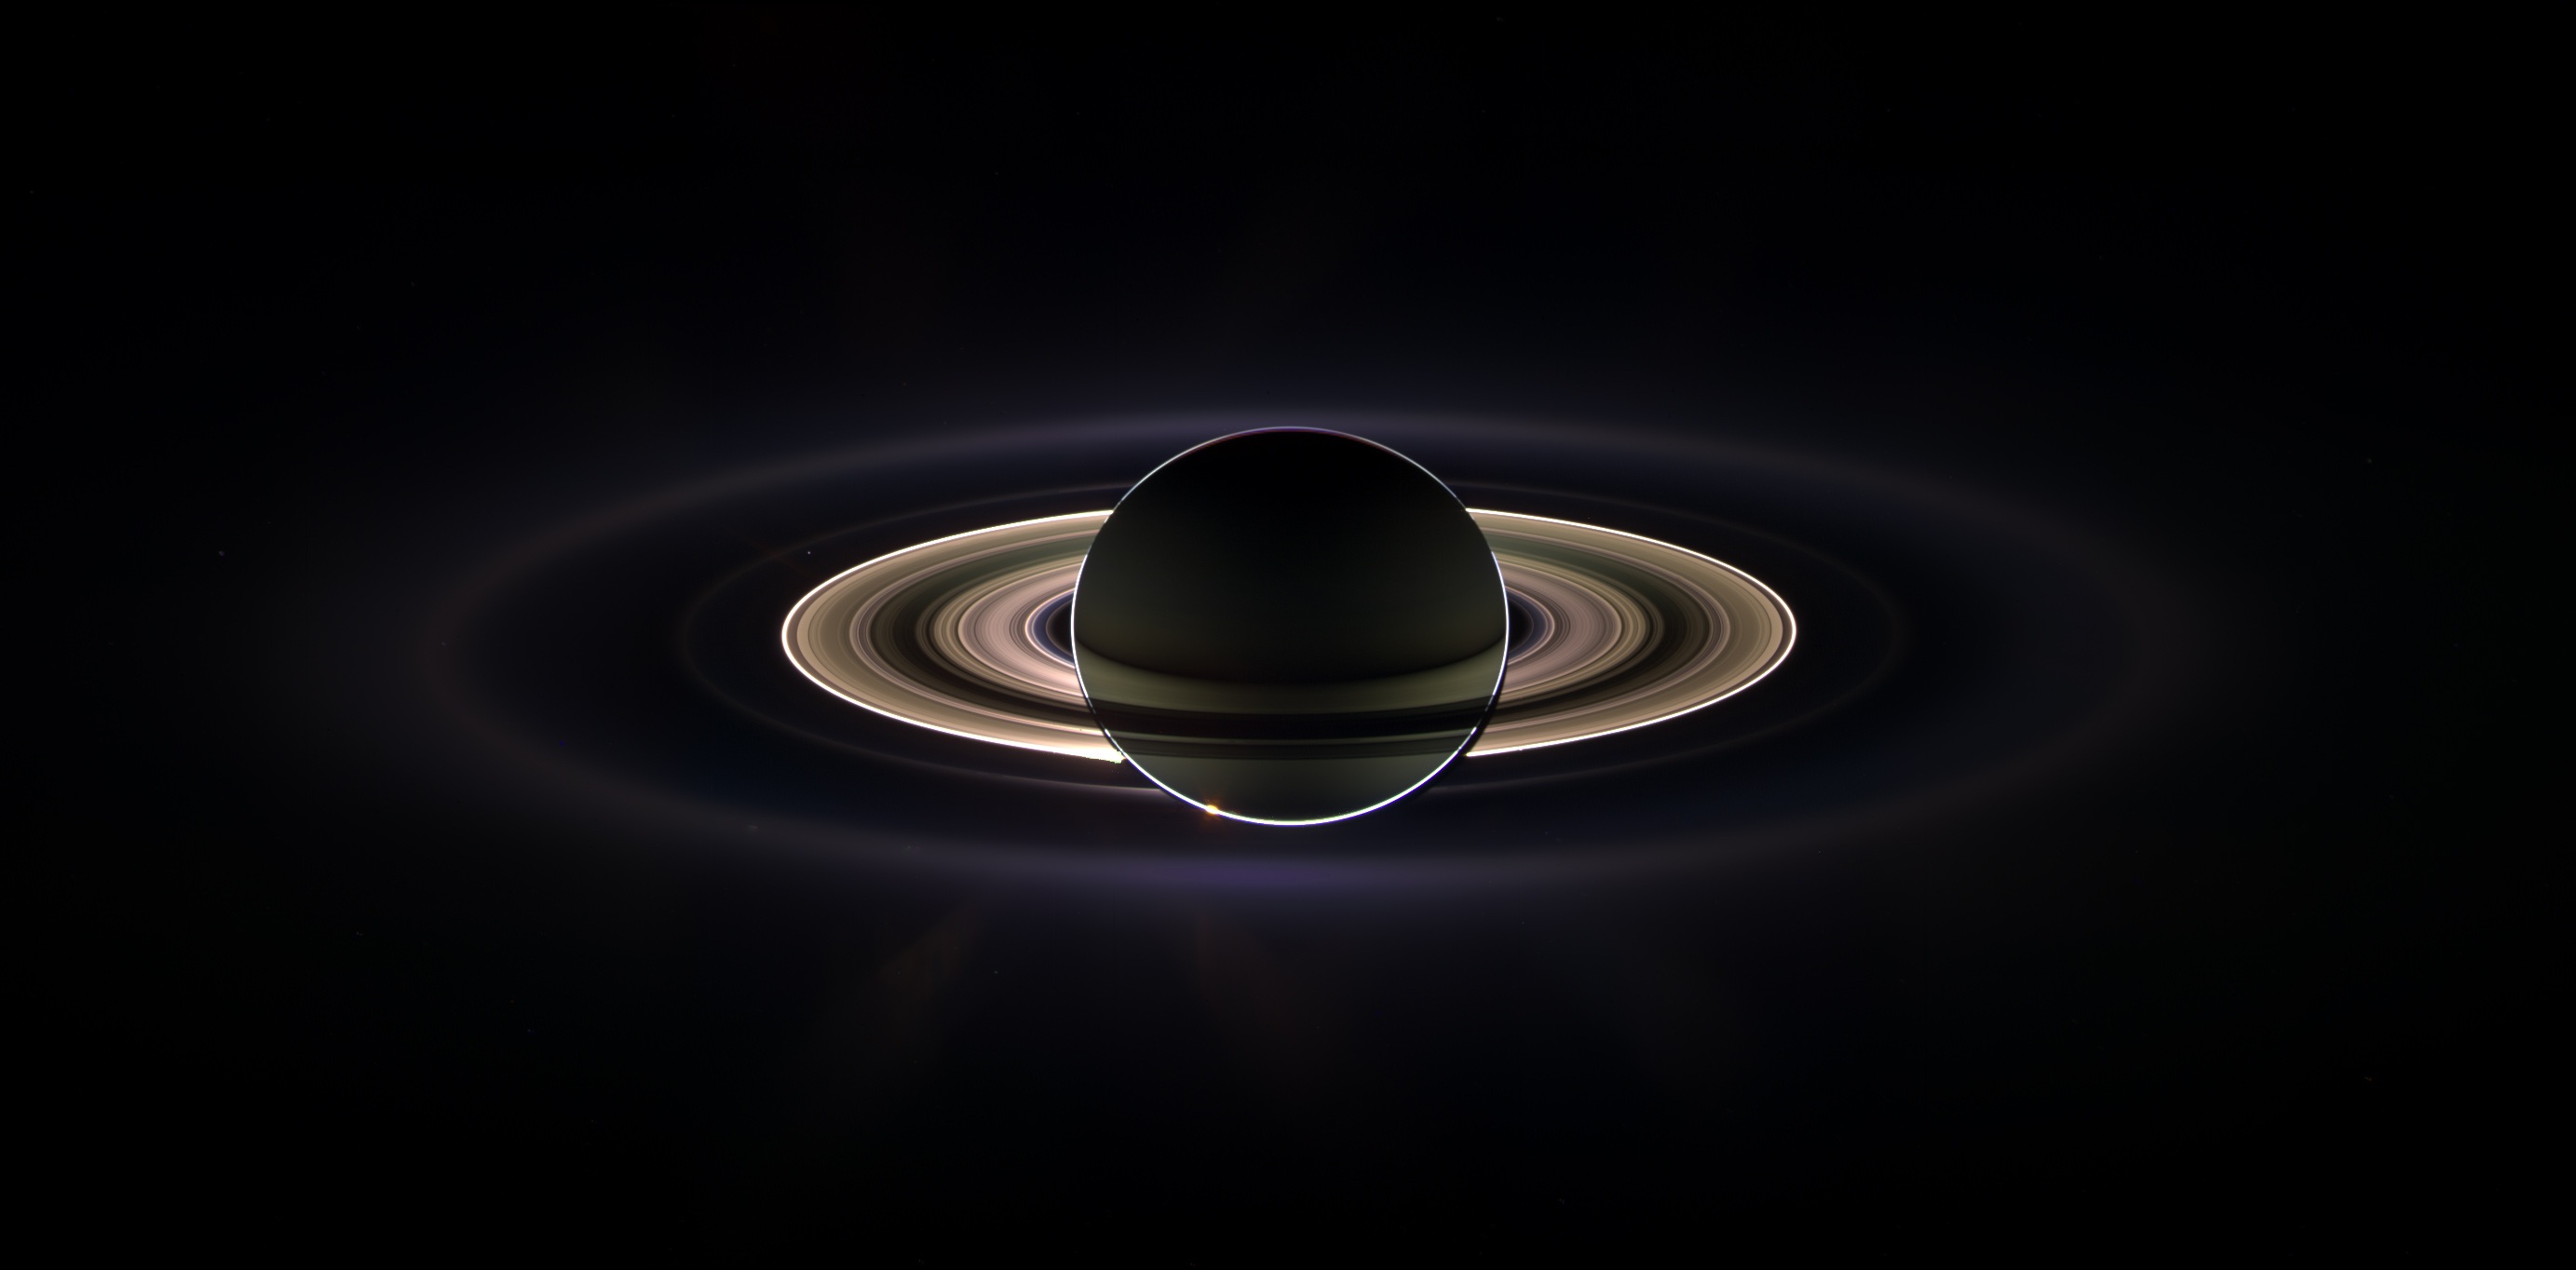 Saturn Eclipse, Eclipse, Lunar, Nature, Planet, HQ Photo